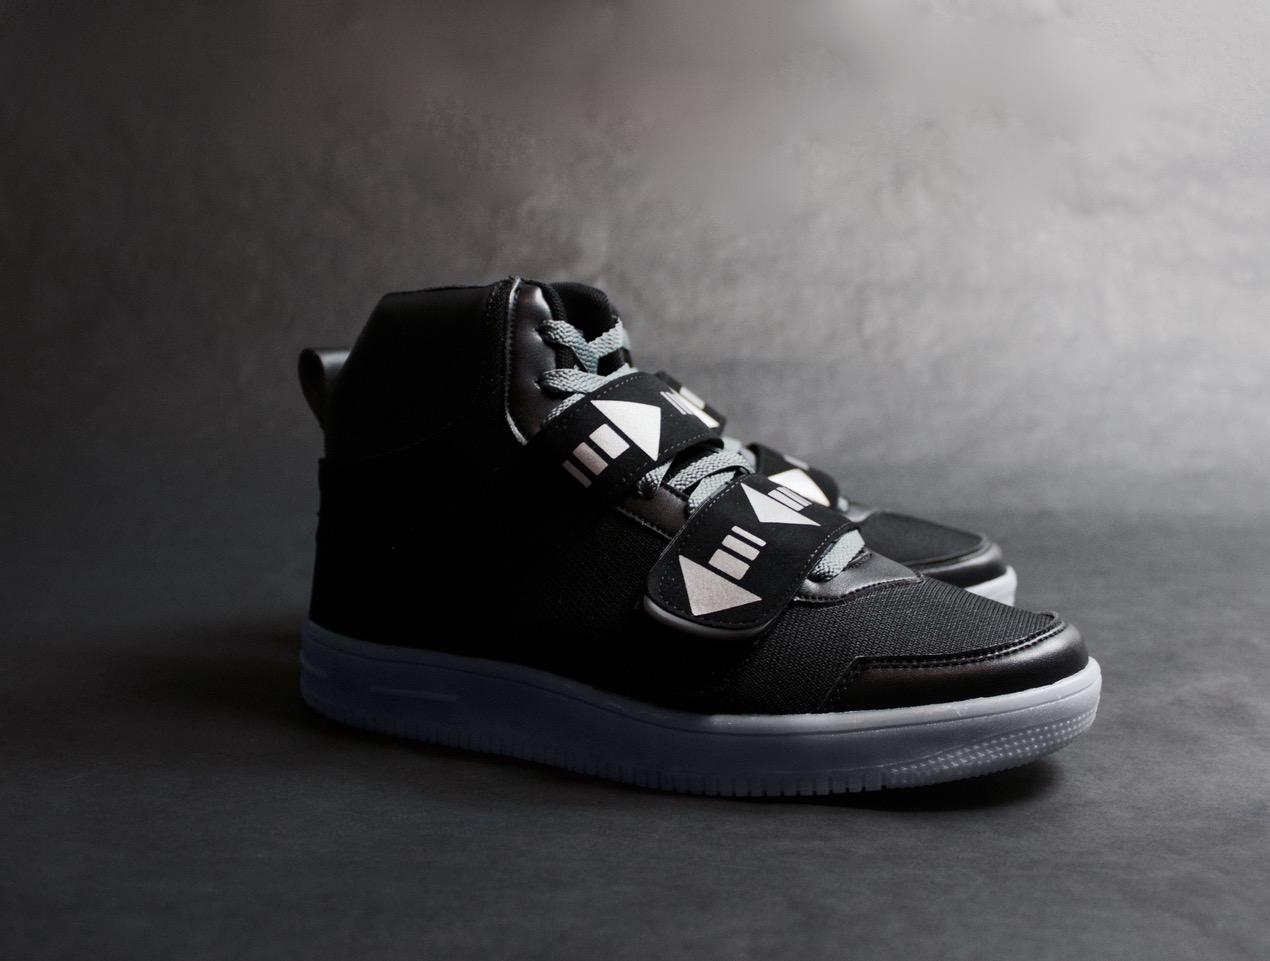 zn footwear prototype 1 black